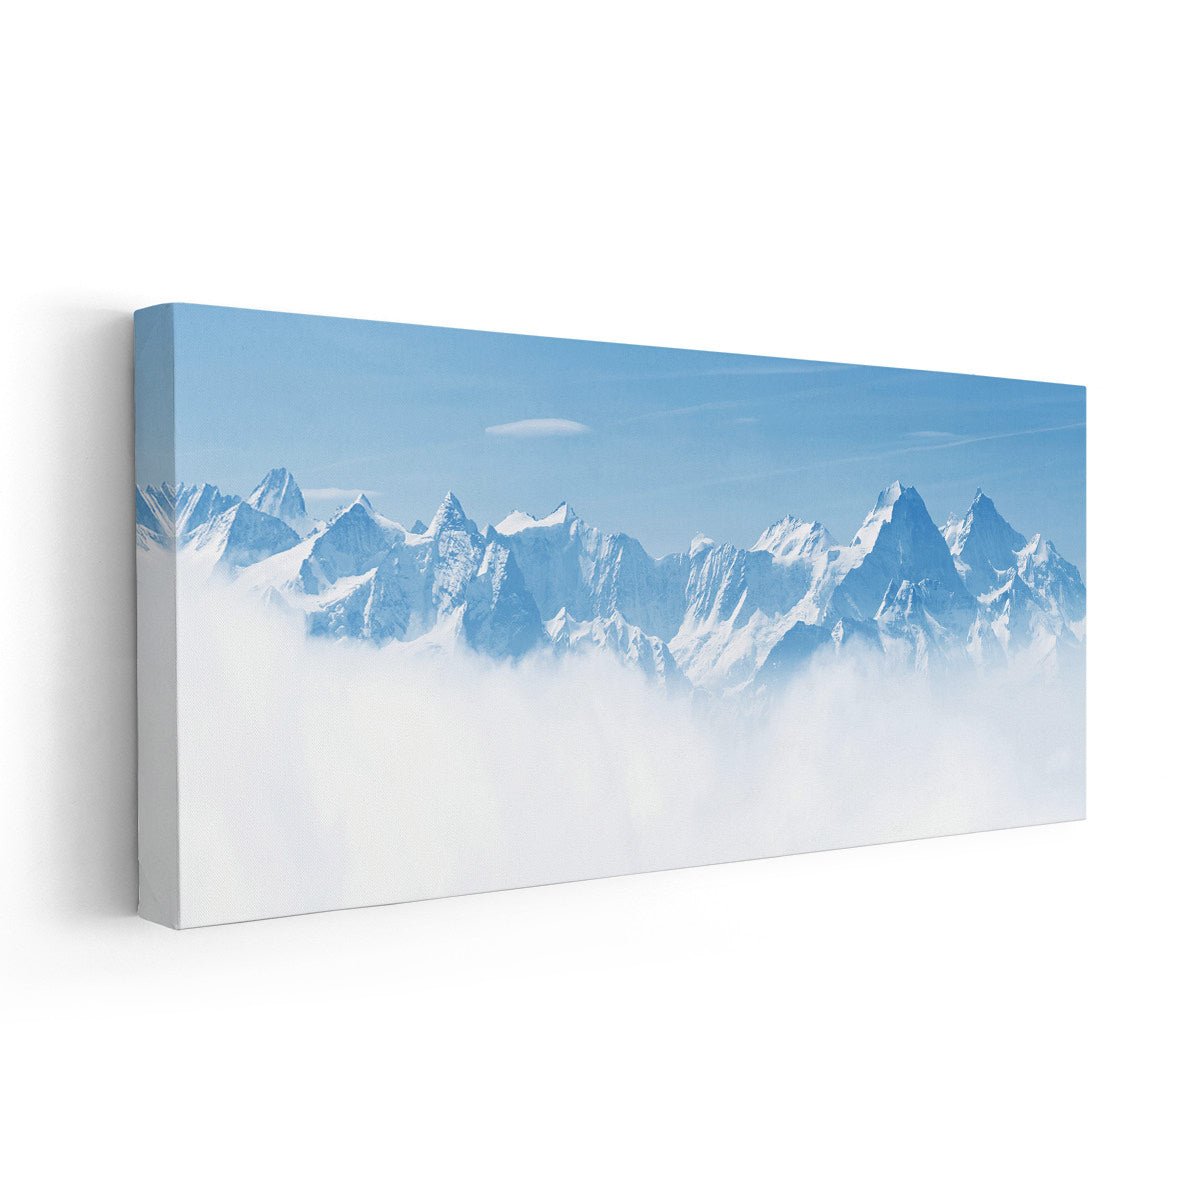 Snow Mountain Peaks Wall Art